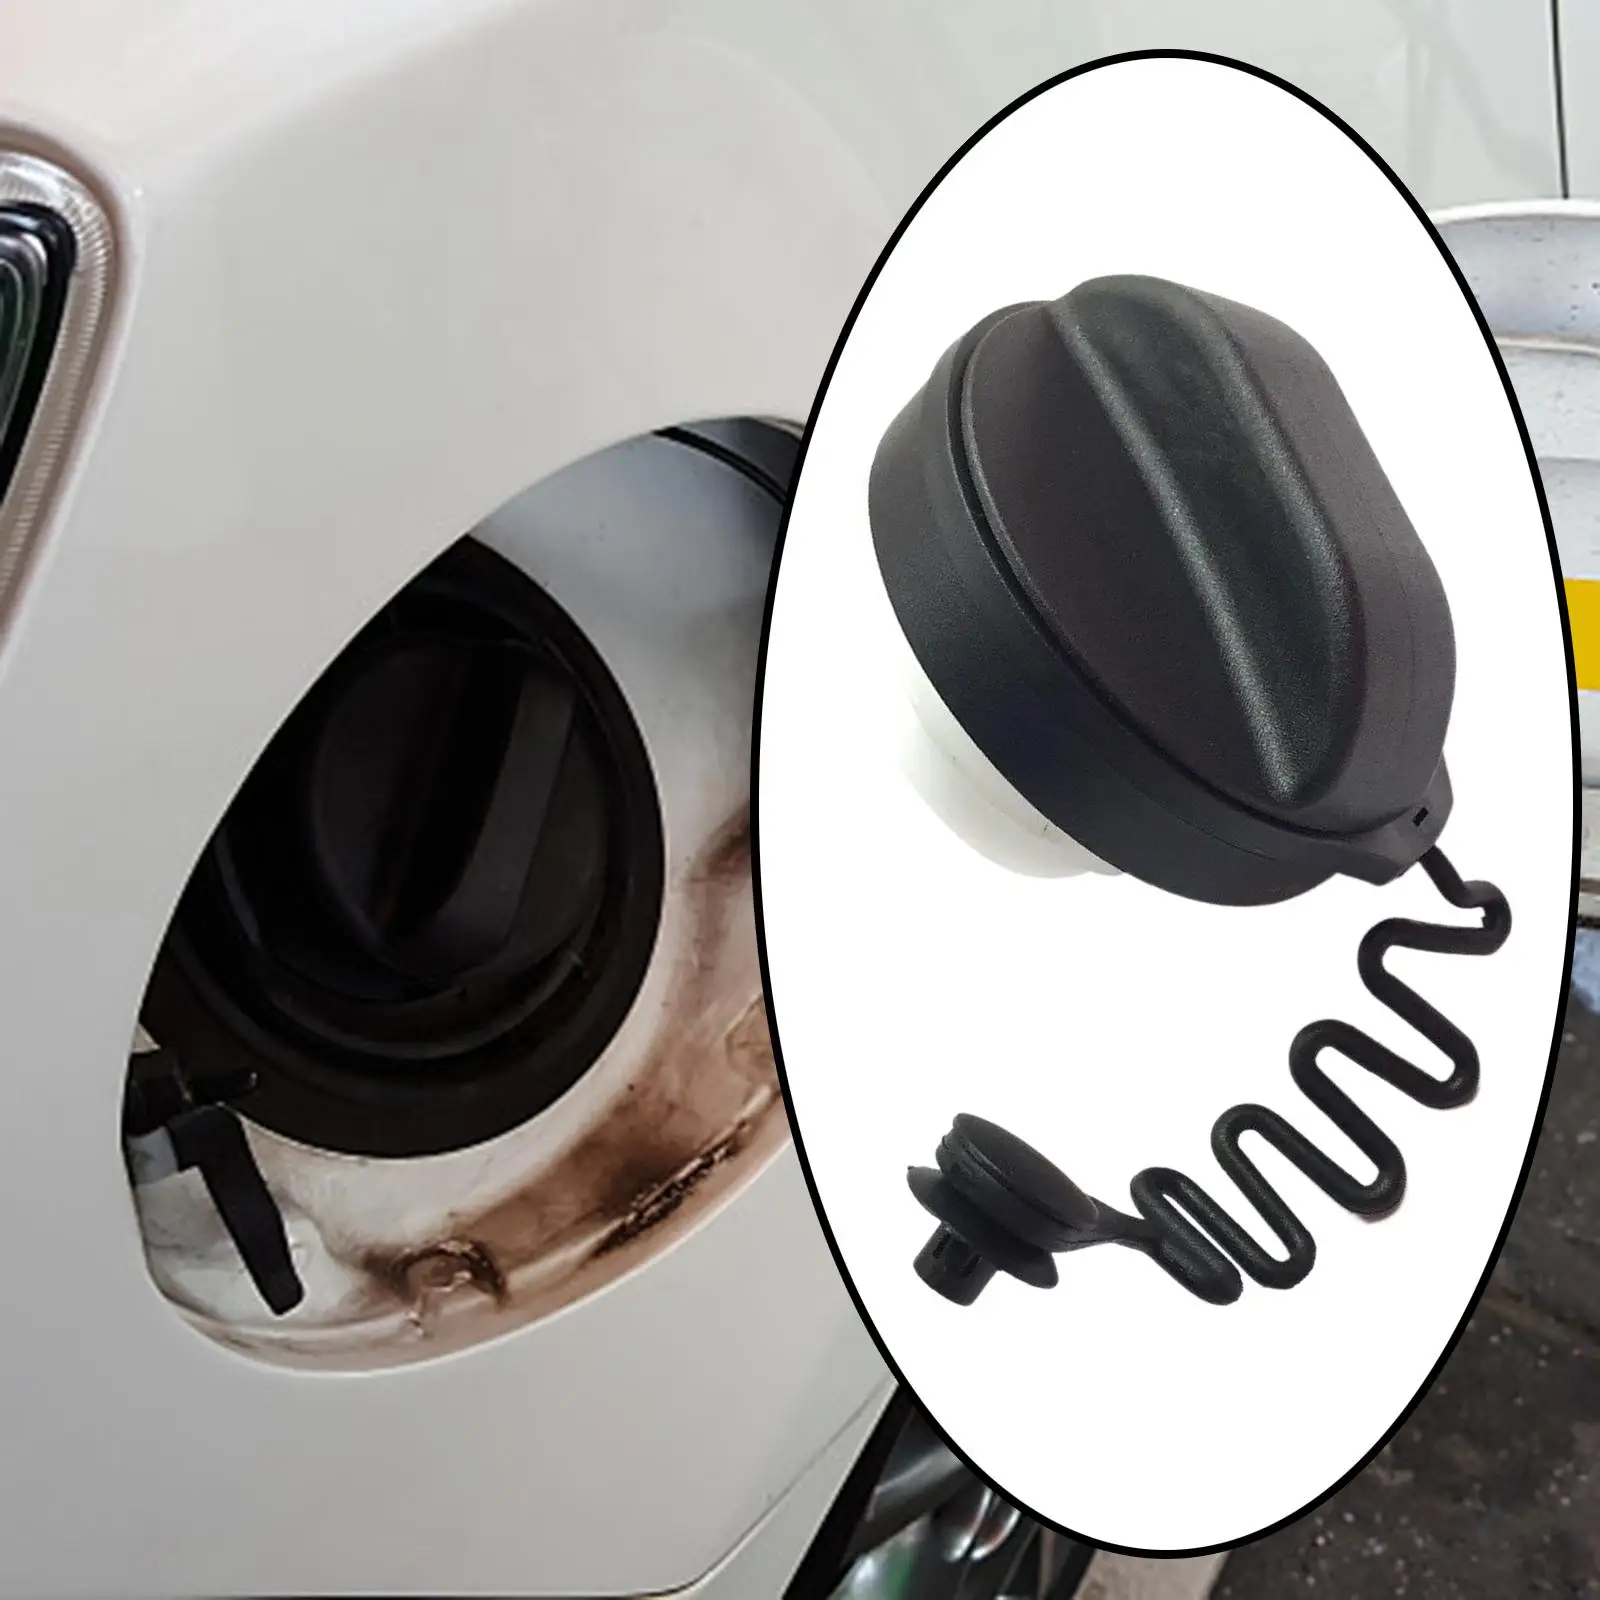 Fuel Filler Cap Assembly Car Accessories for Nissan Models Professional